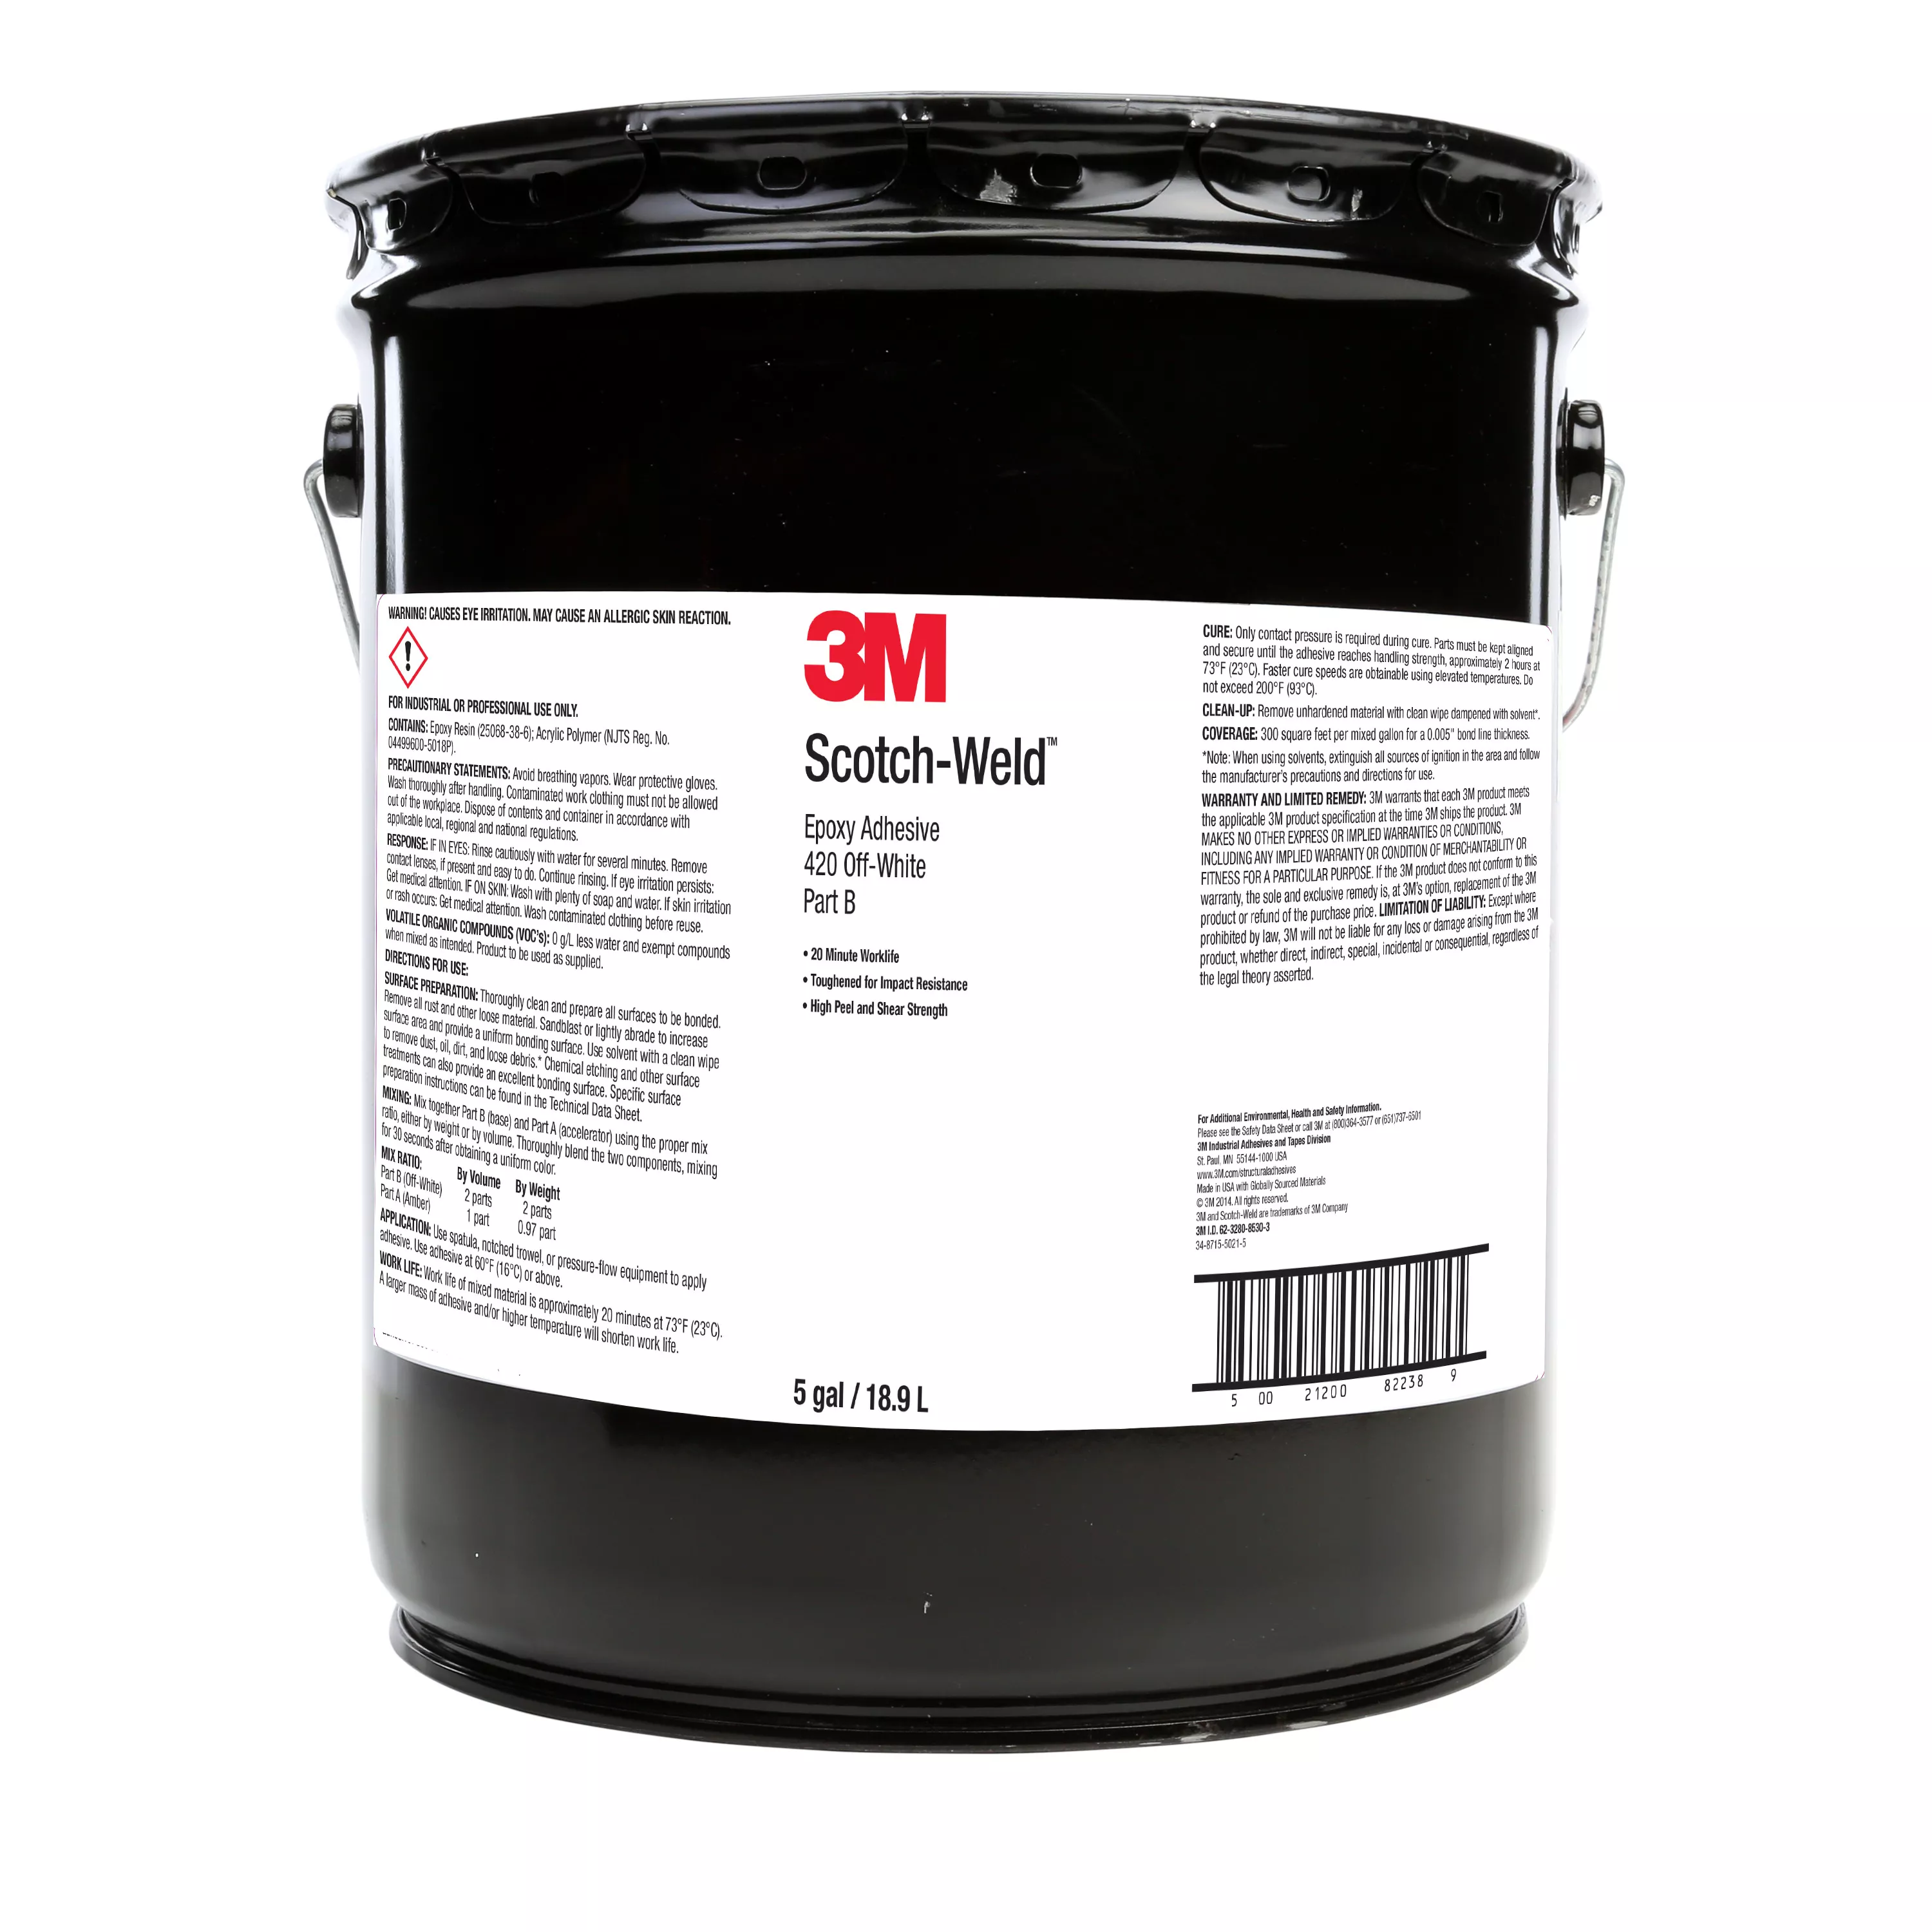 3M™ Scotch-Weld™ Epoxy Adhesive 420, Off-White, Part B, 5 Gallon (Pail),
1 Each/Drum